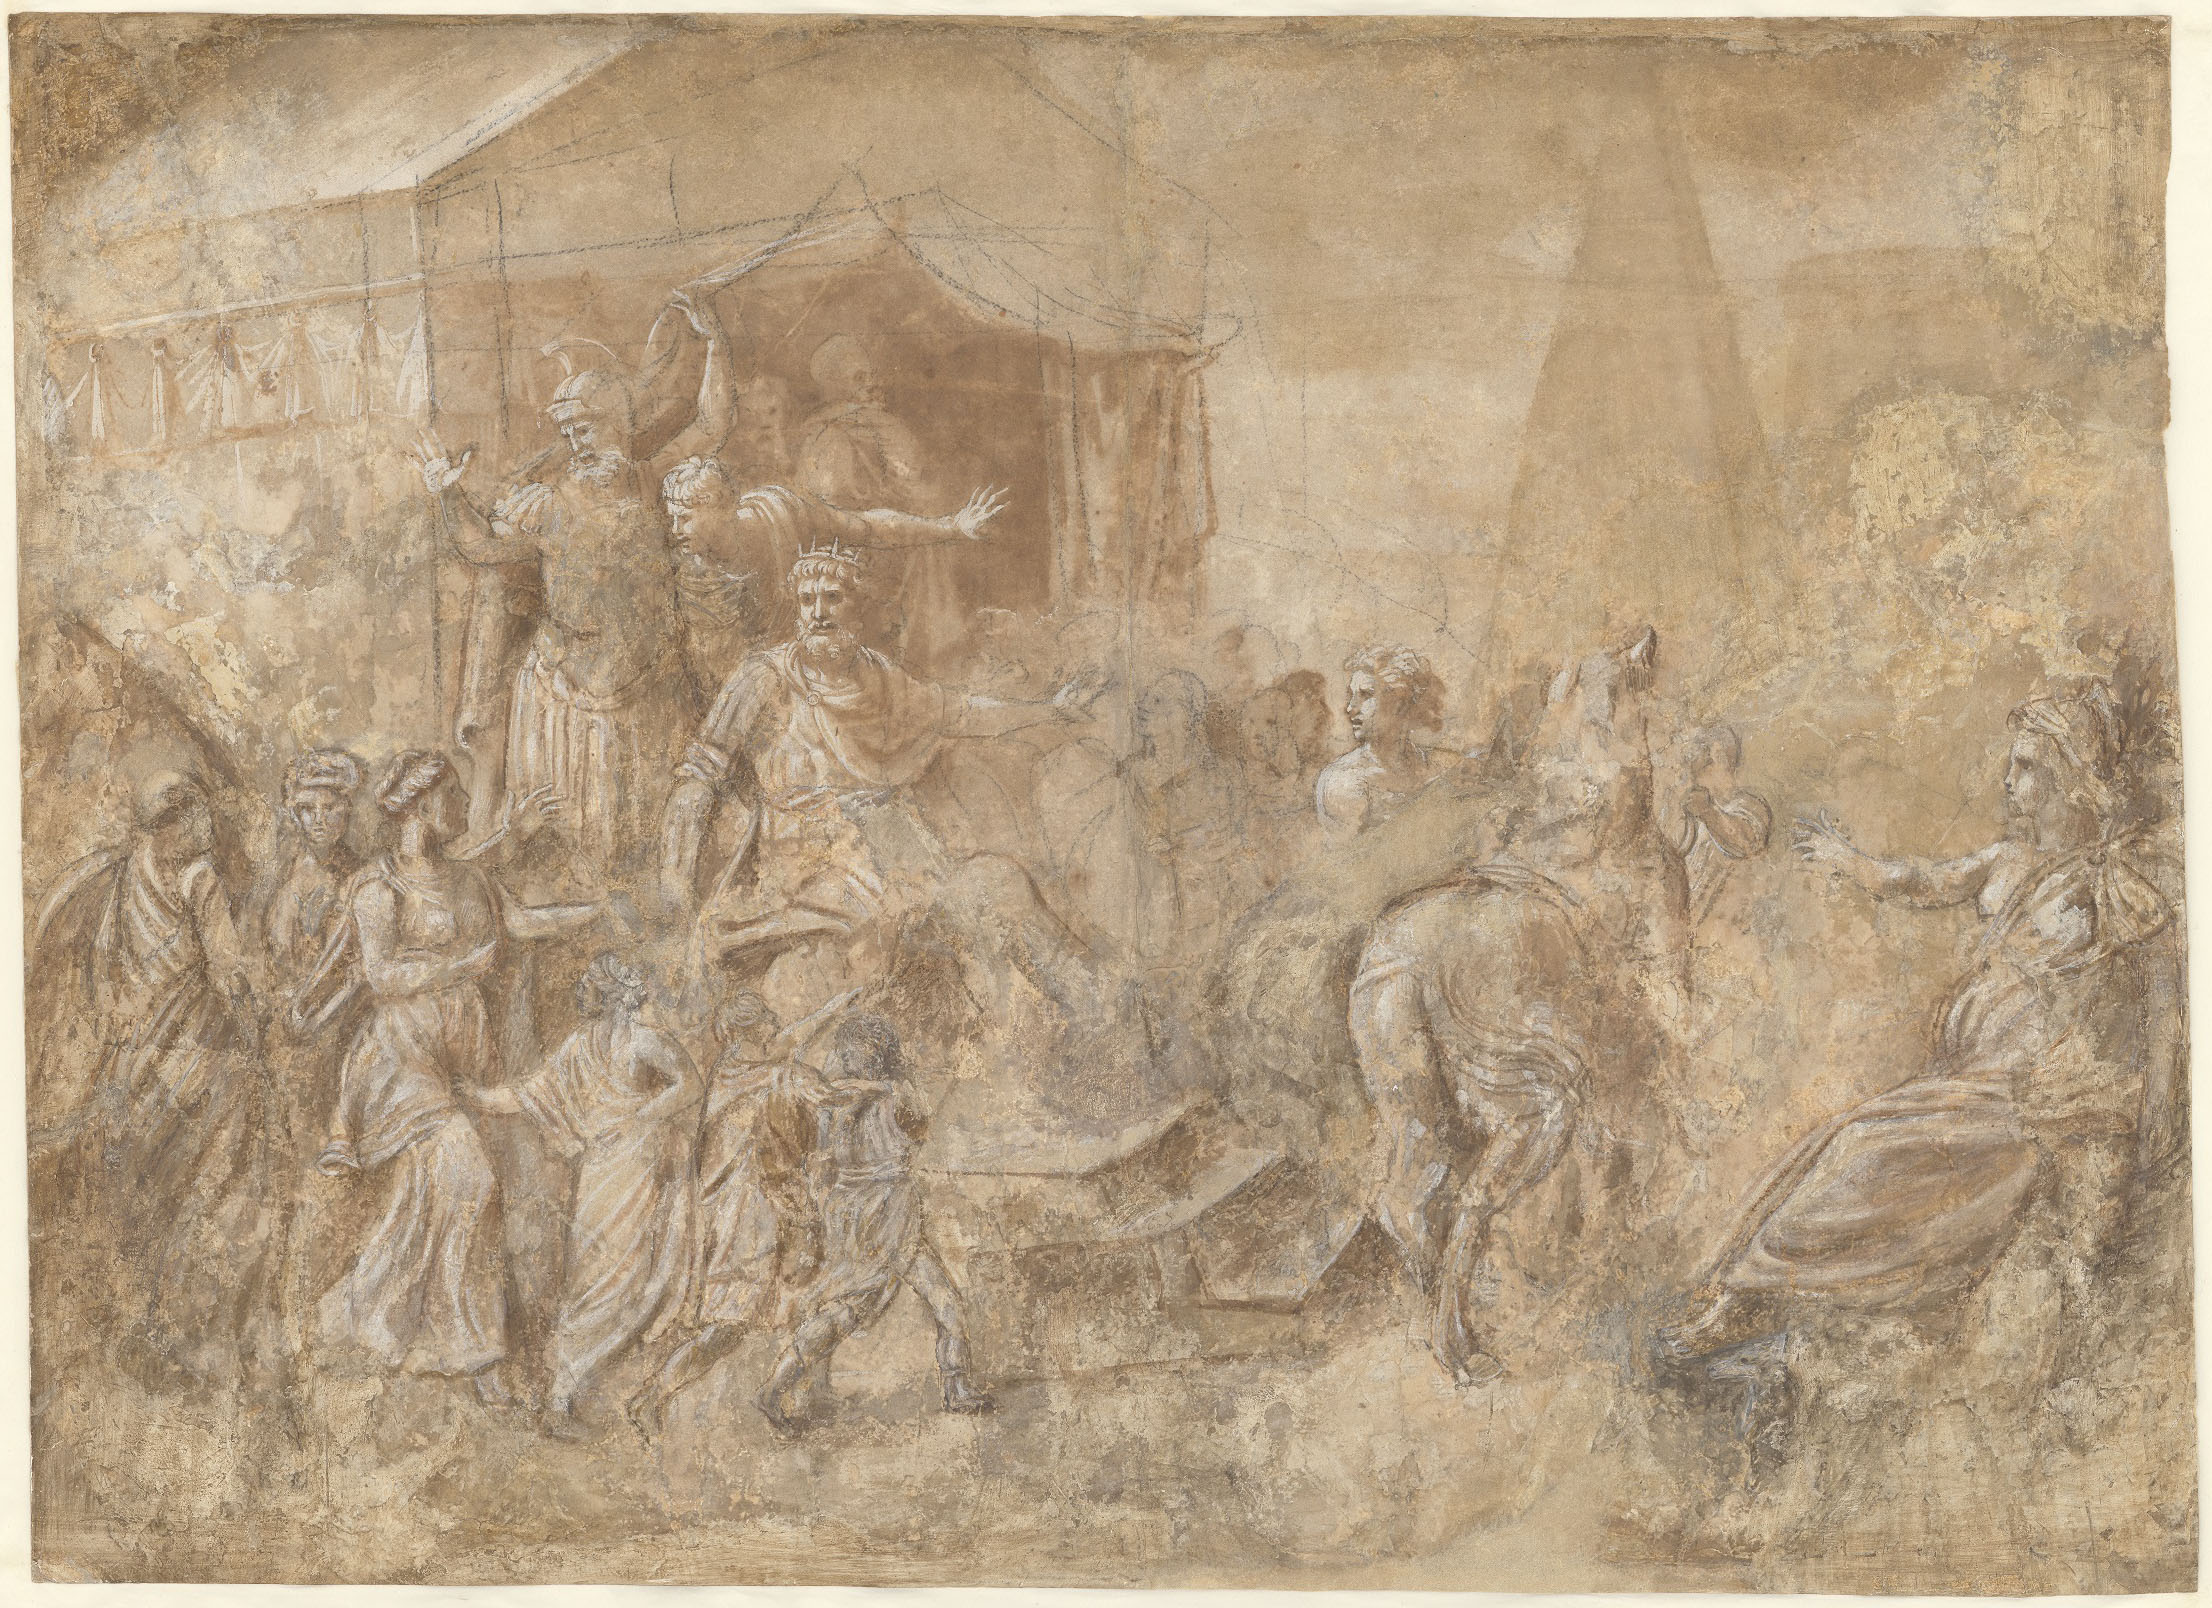 Giulio Romano, The Release of Cloelia, ca.1524, watercolor and brown ink on paper, 39.8 x 54.8 cm, Rome, Bibliotheca Hertziana